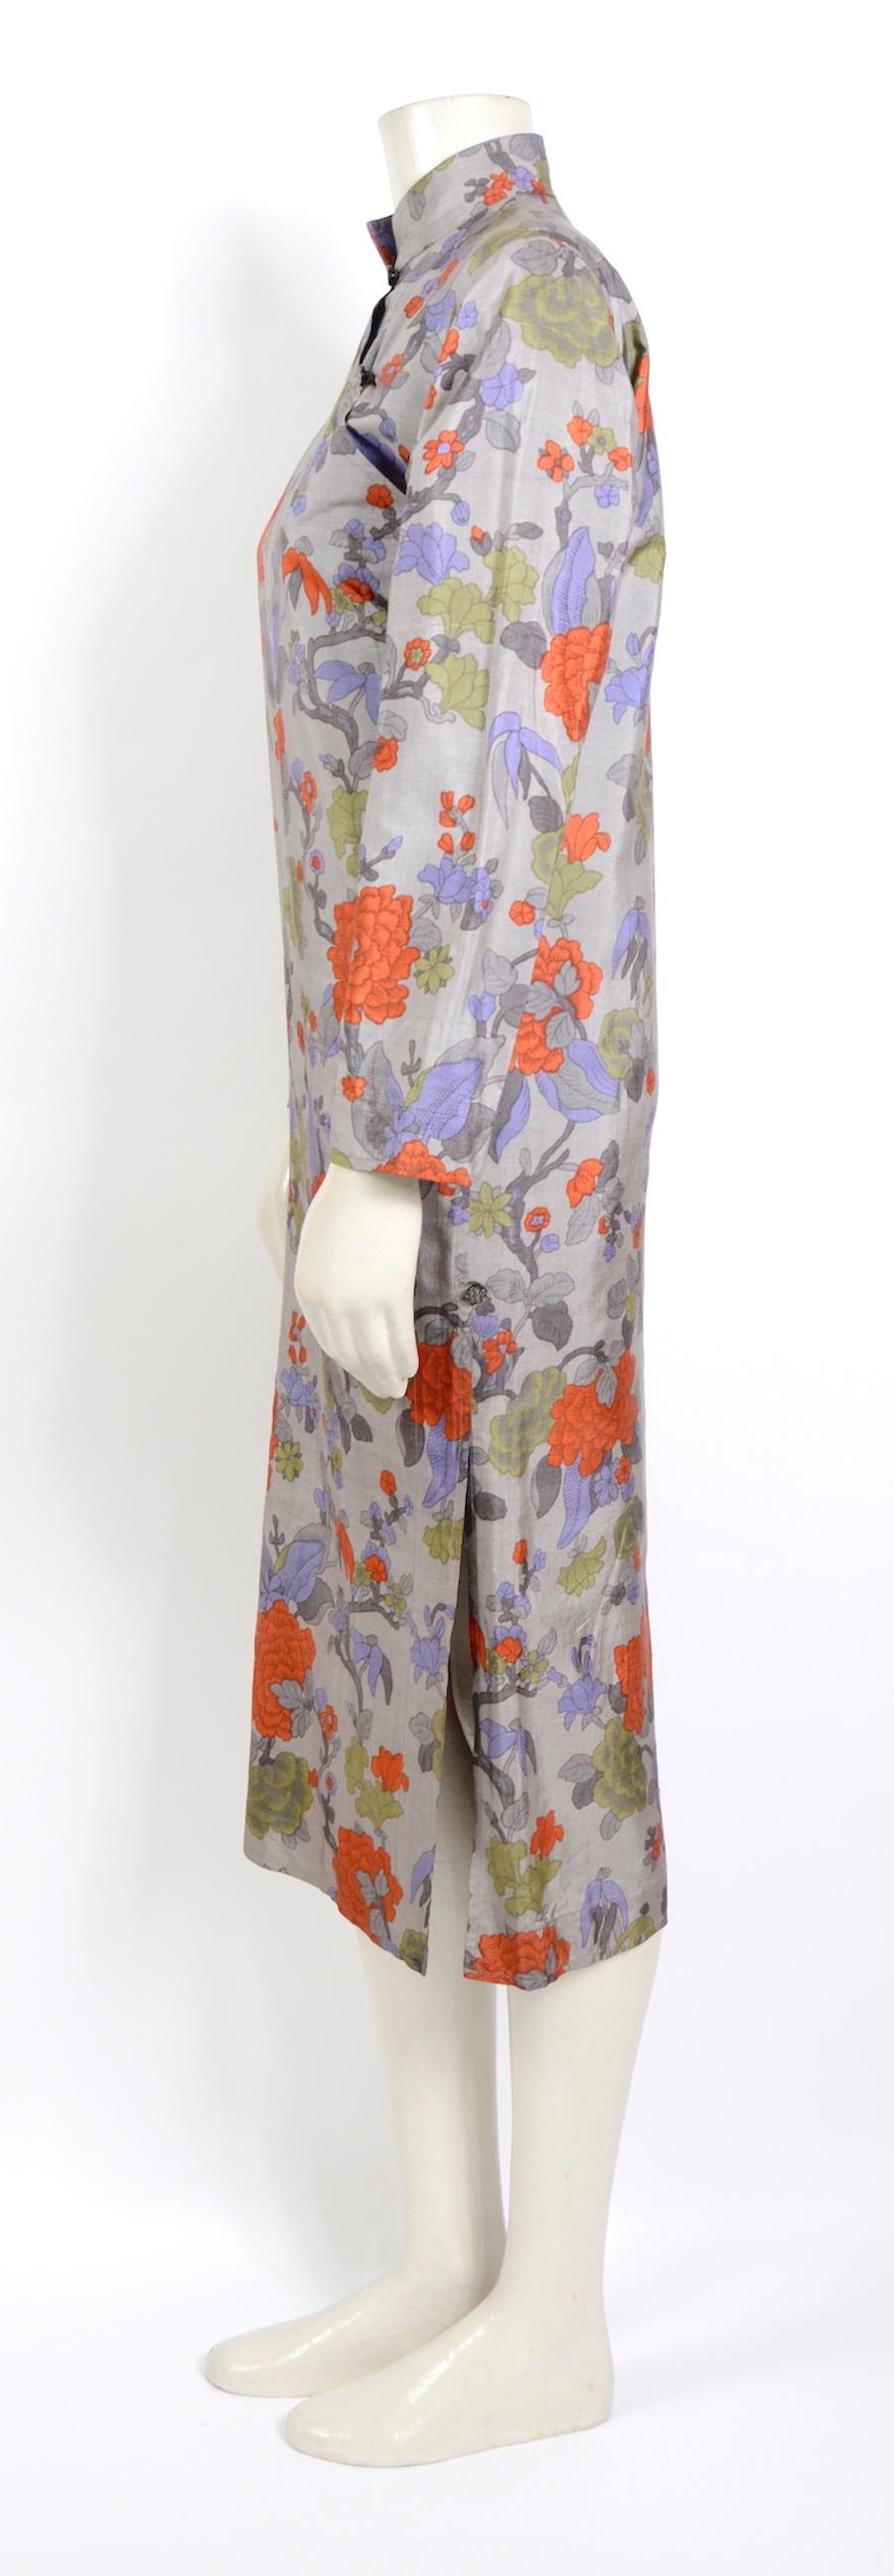 Yves Saint Laurent 1970s “Les Chinoises” collection silk dress and original belt 1